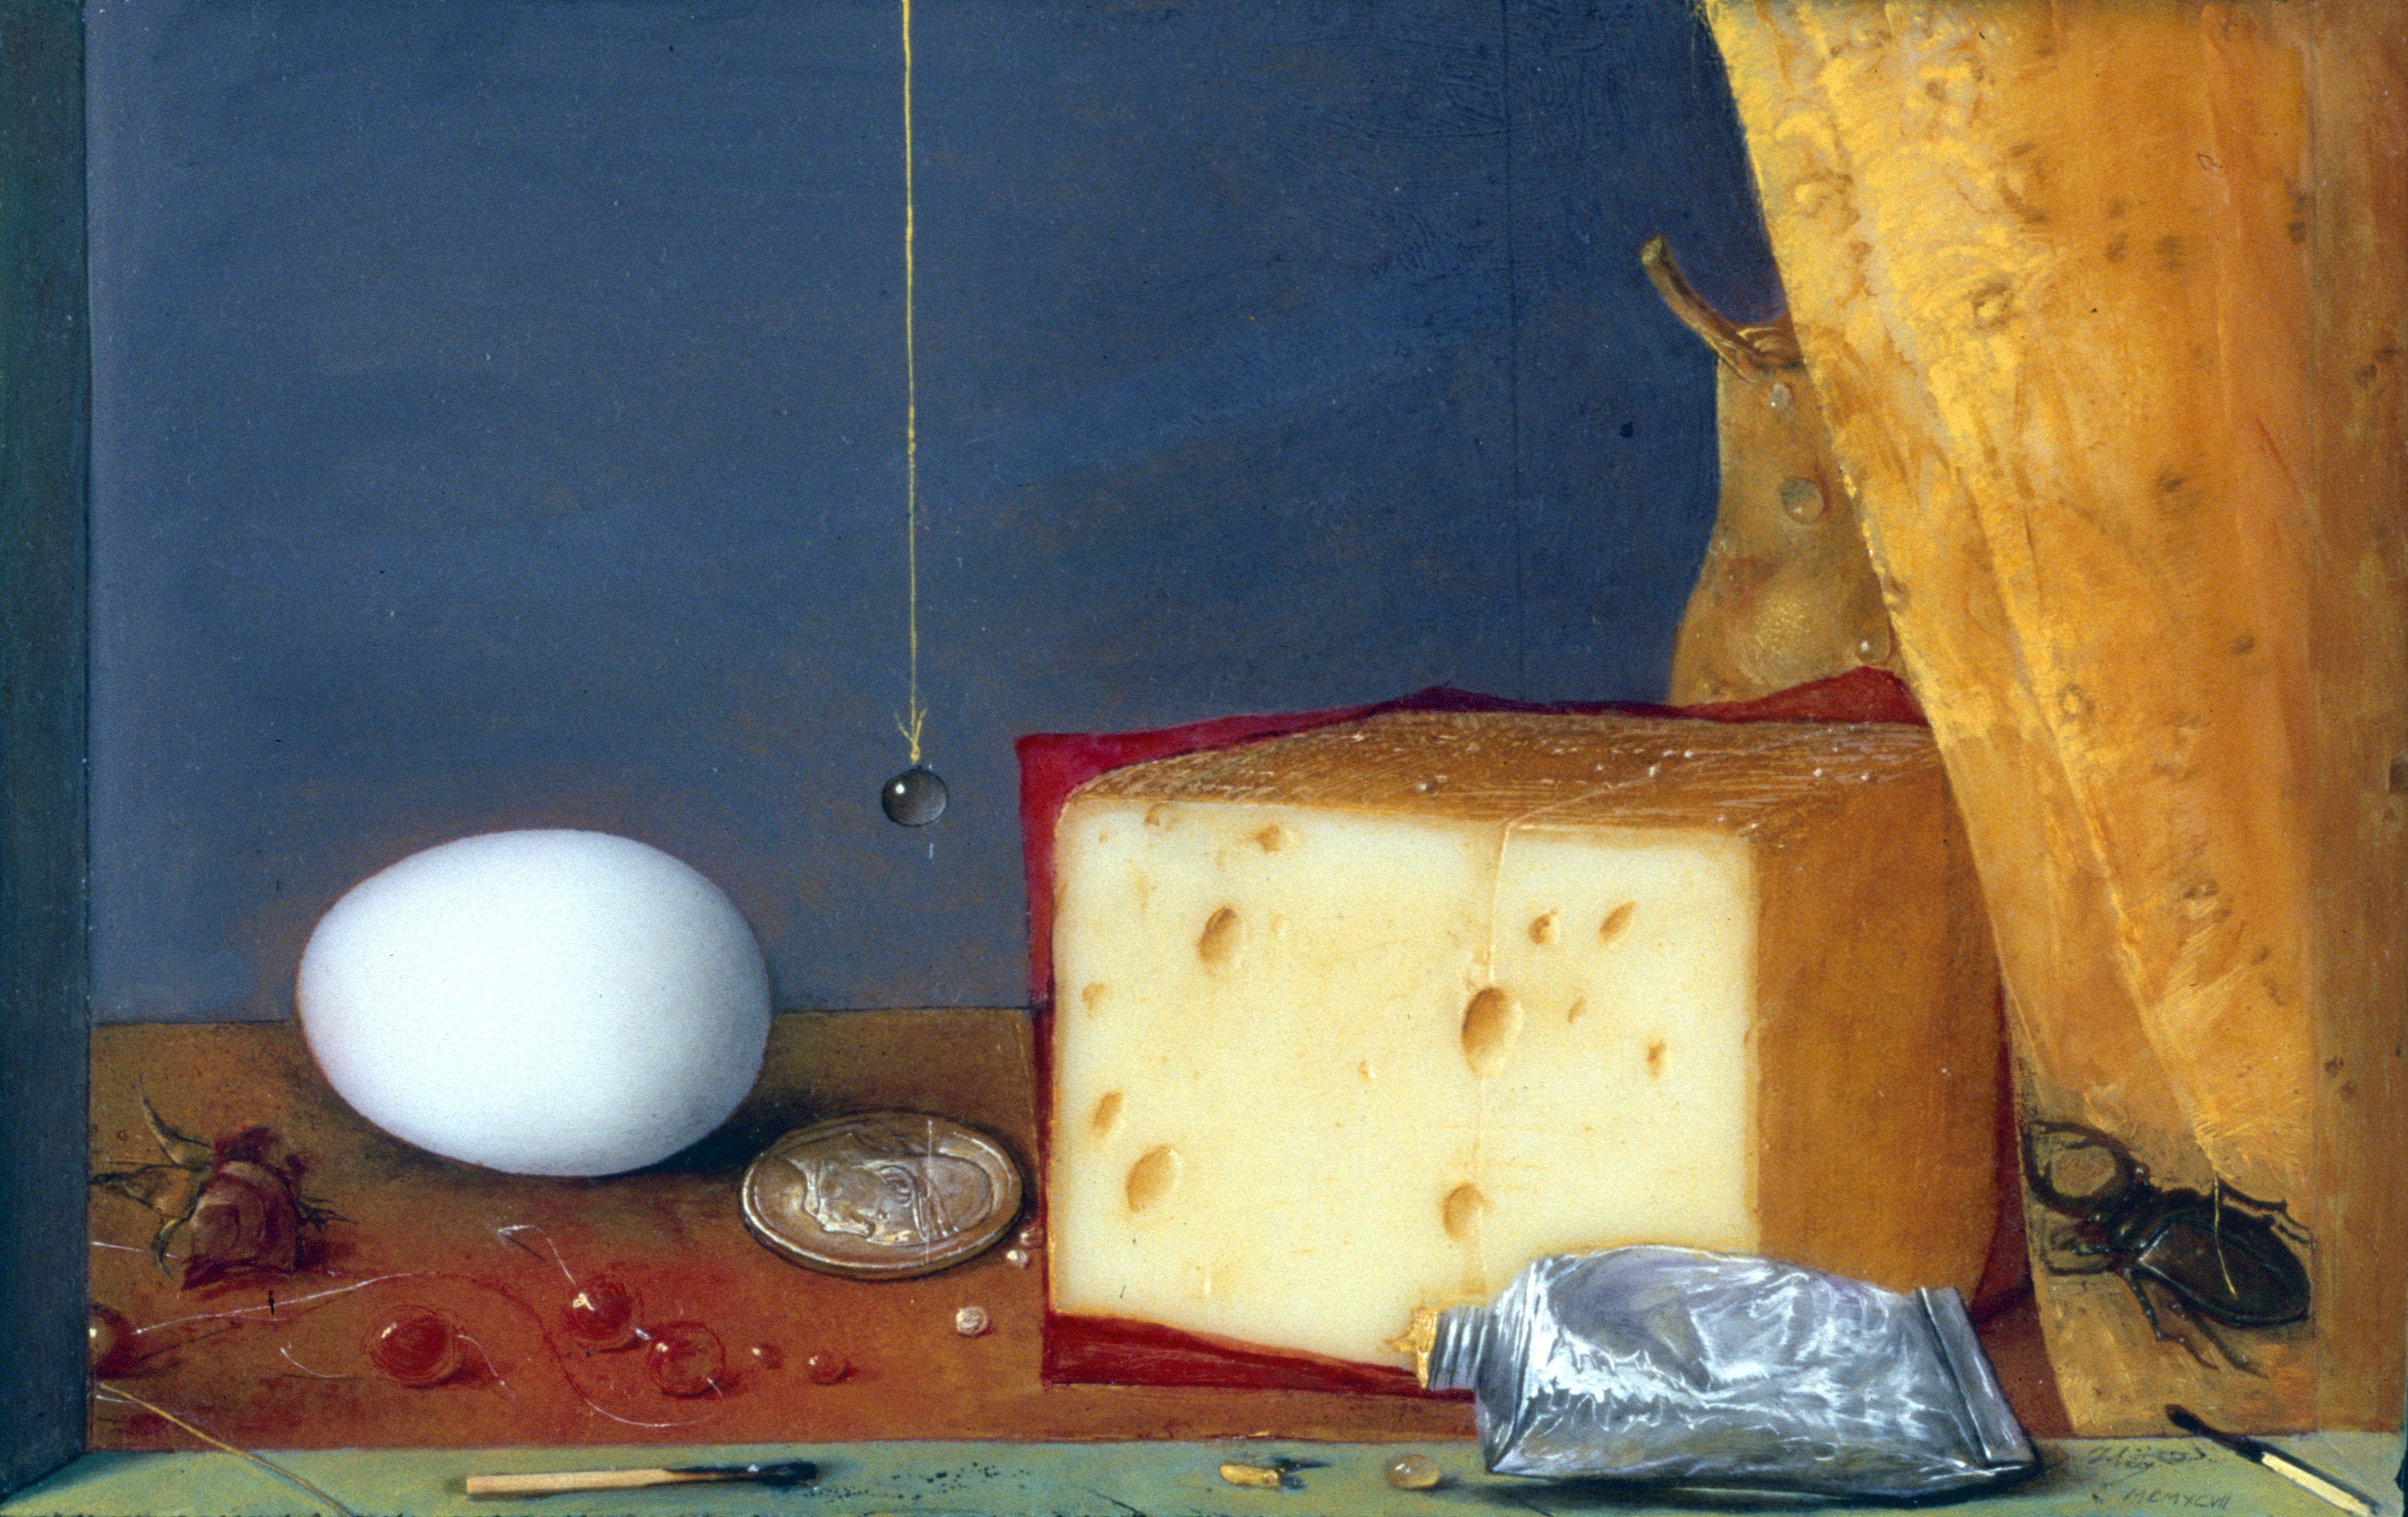 Hús, Zoltán: Still life with cheese